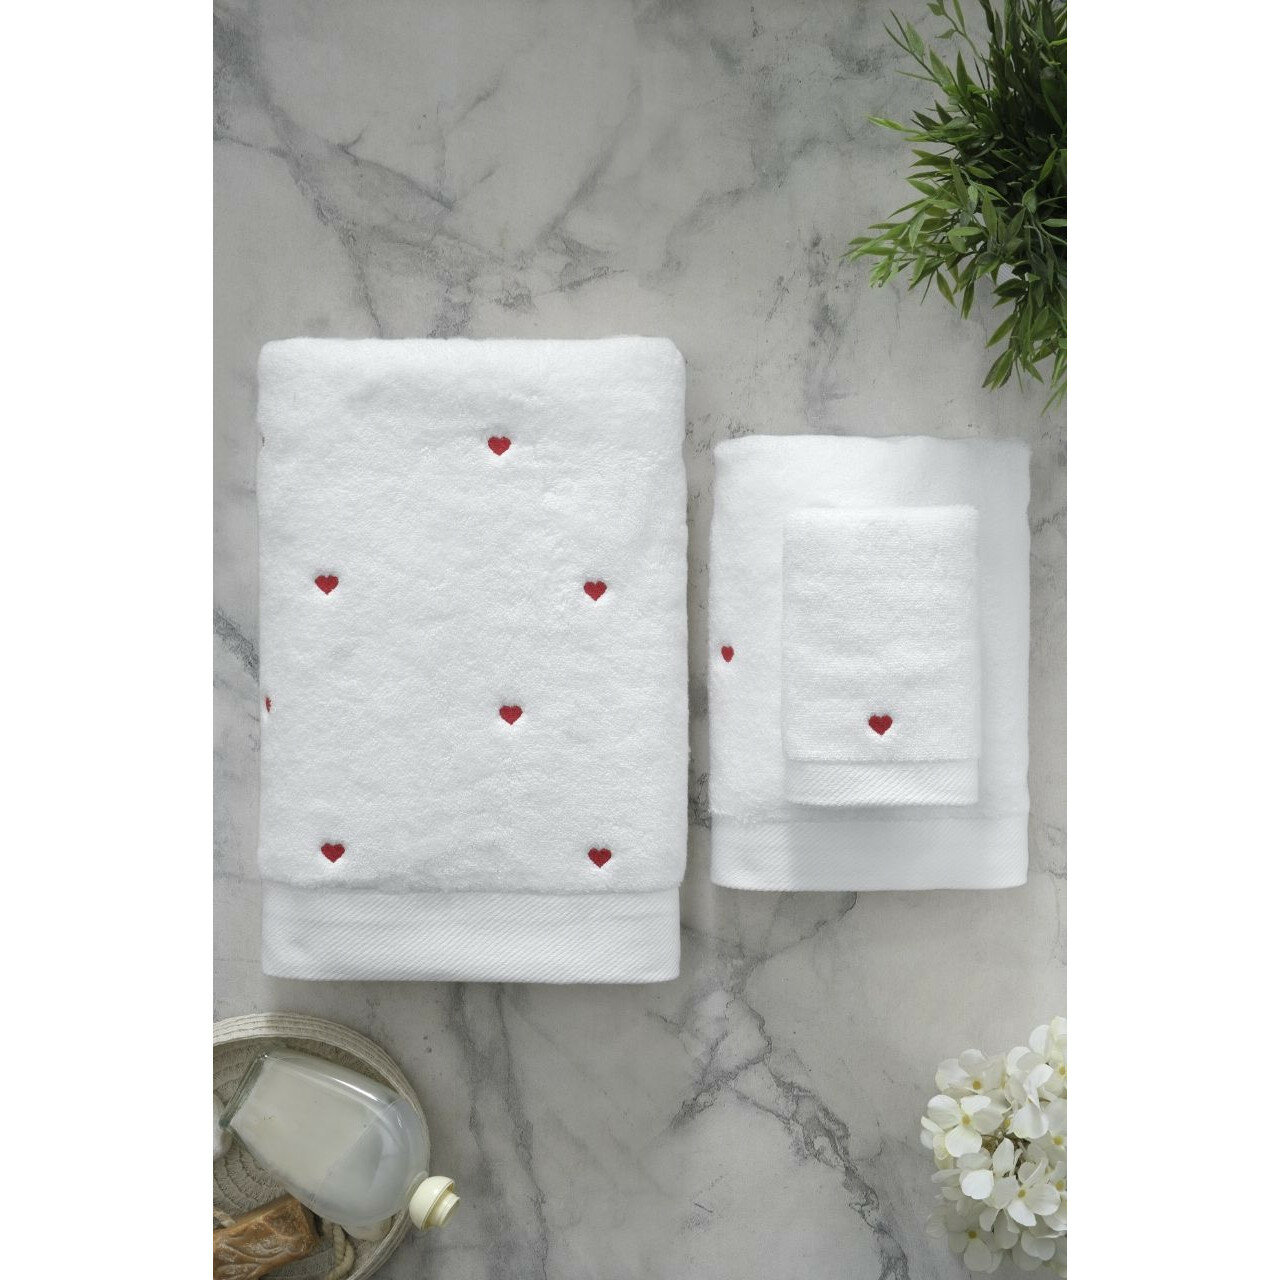 Soft cotton Полотенце Love цвет: белый, красный (50х100 см)